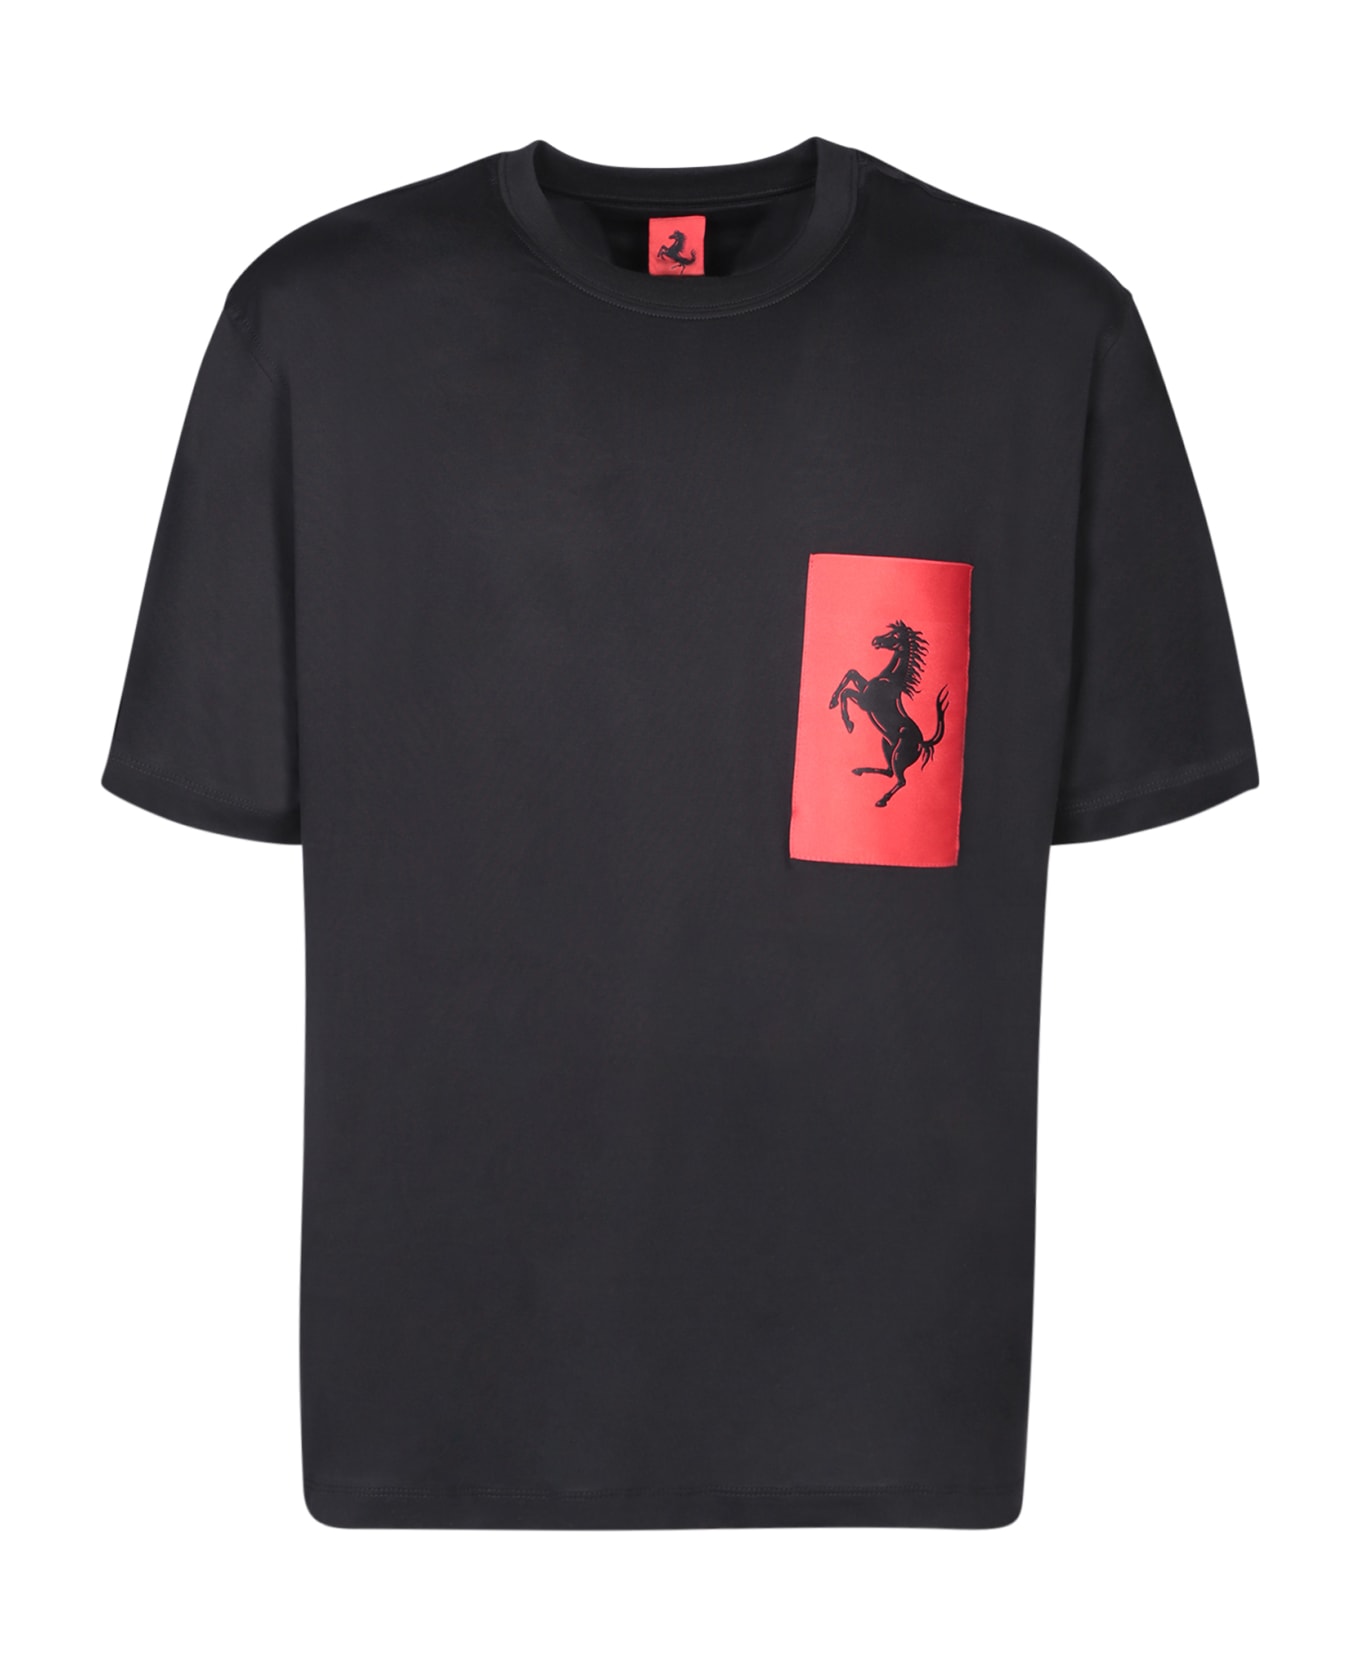 Ferrari Cavallino Rampante Chest Black T-shirt - Red シャツ